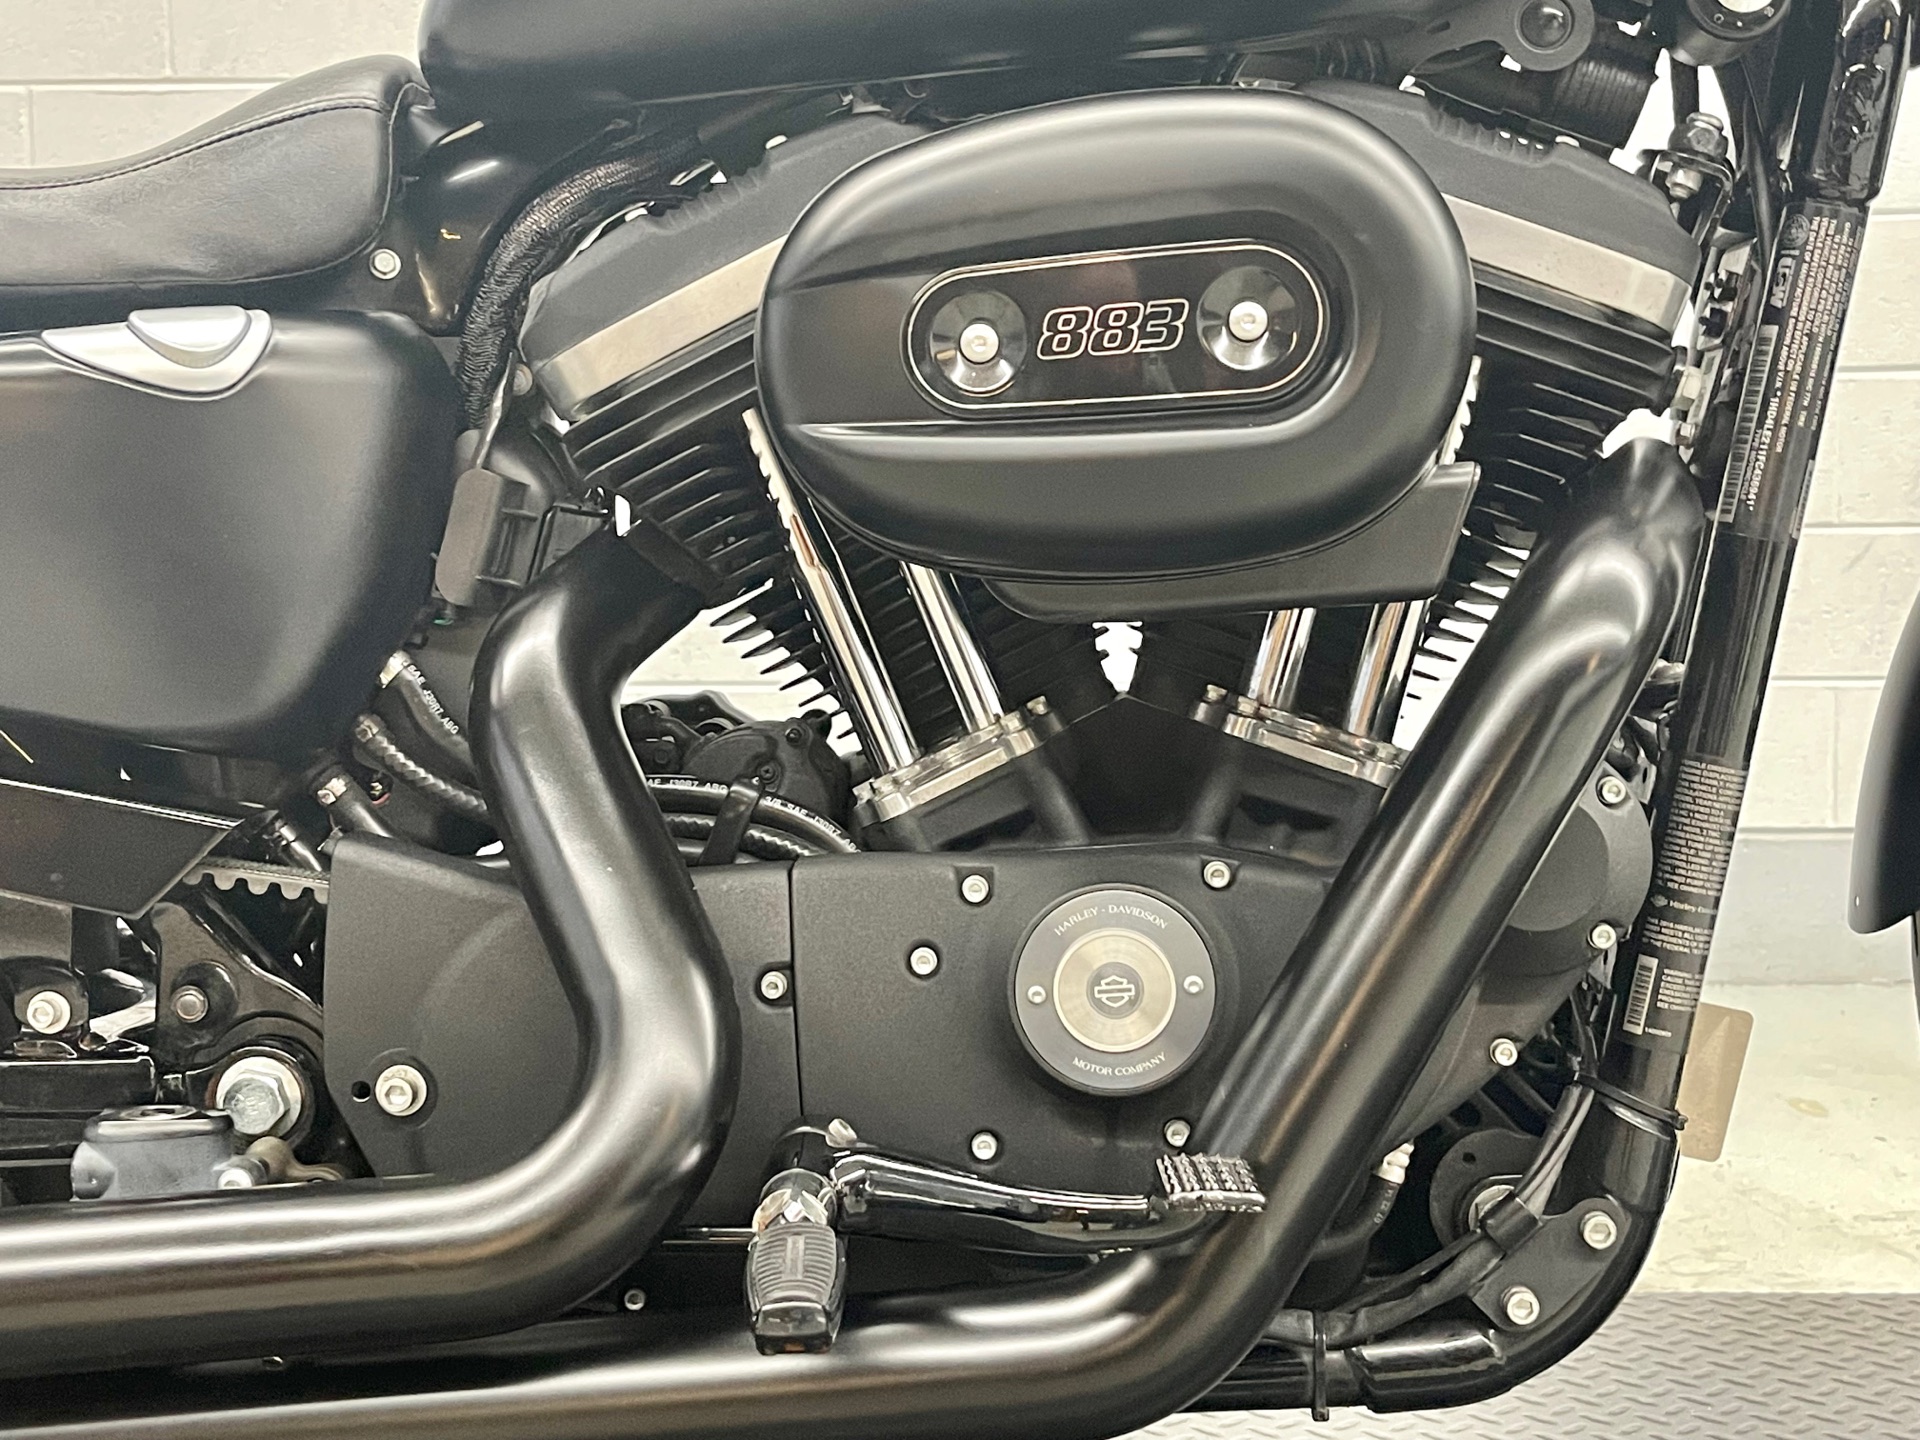 2015 Harley-Davidson Iron 883™ in Fredericksburg, Virginia - Photo 14